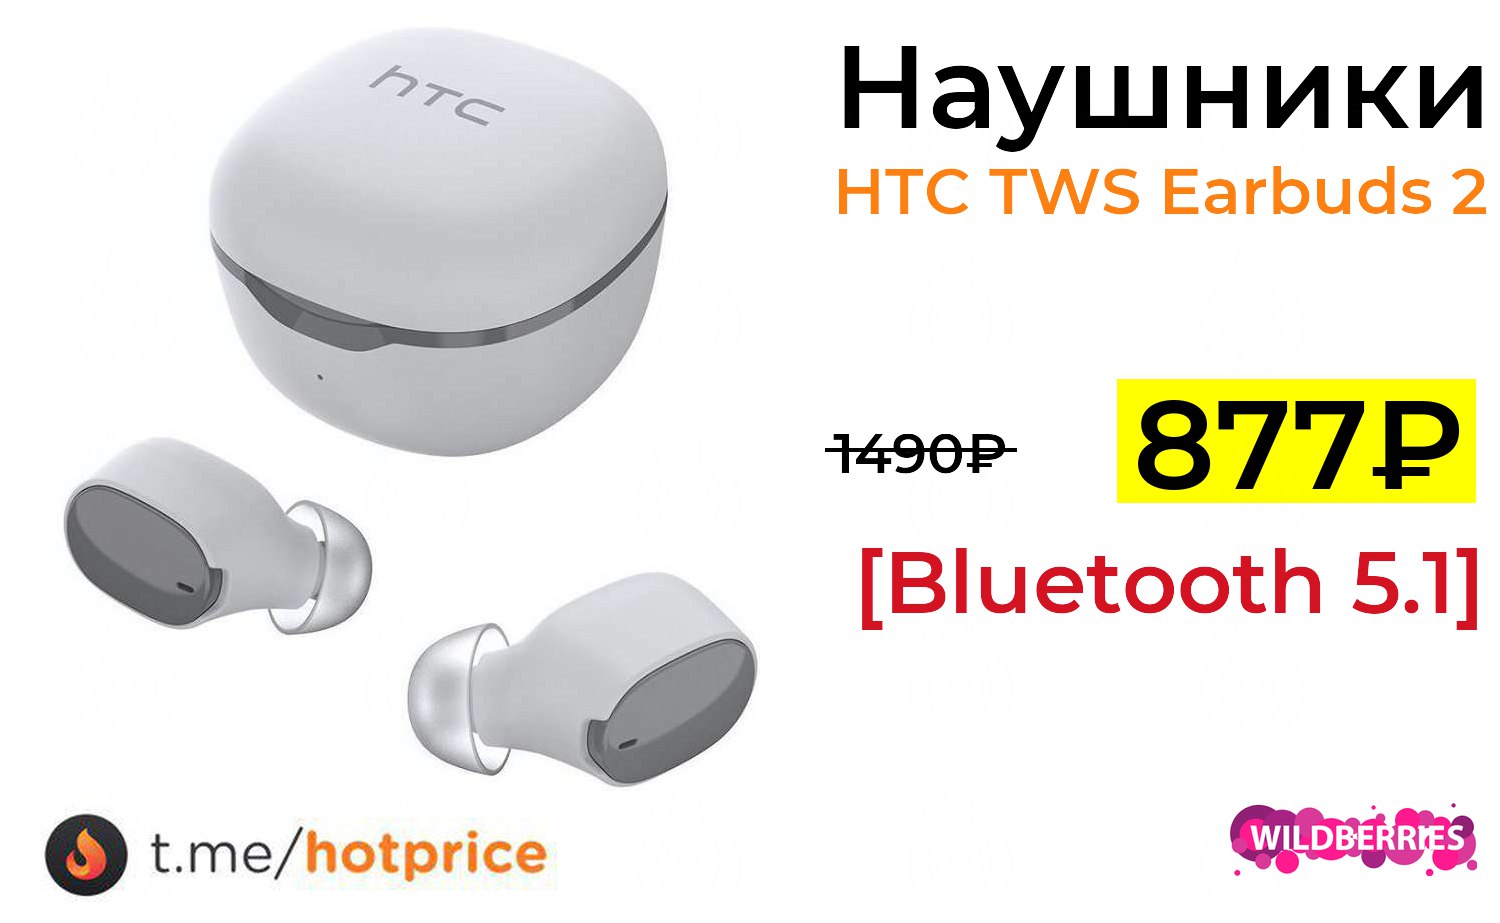 Htc true wireless. HTC E-mo 1 true Wireless Earbuds Plus. HTC Earbuds TWS 1. HTC / гарнитура true Wireless Earbuds 2. HTC TWS 3 белые.